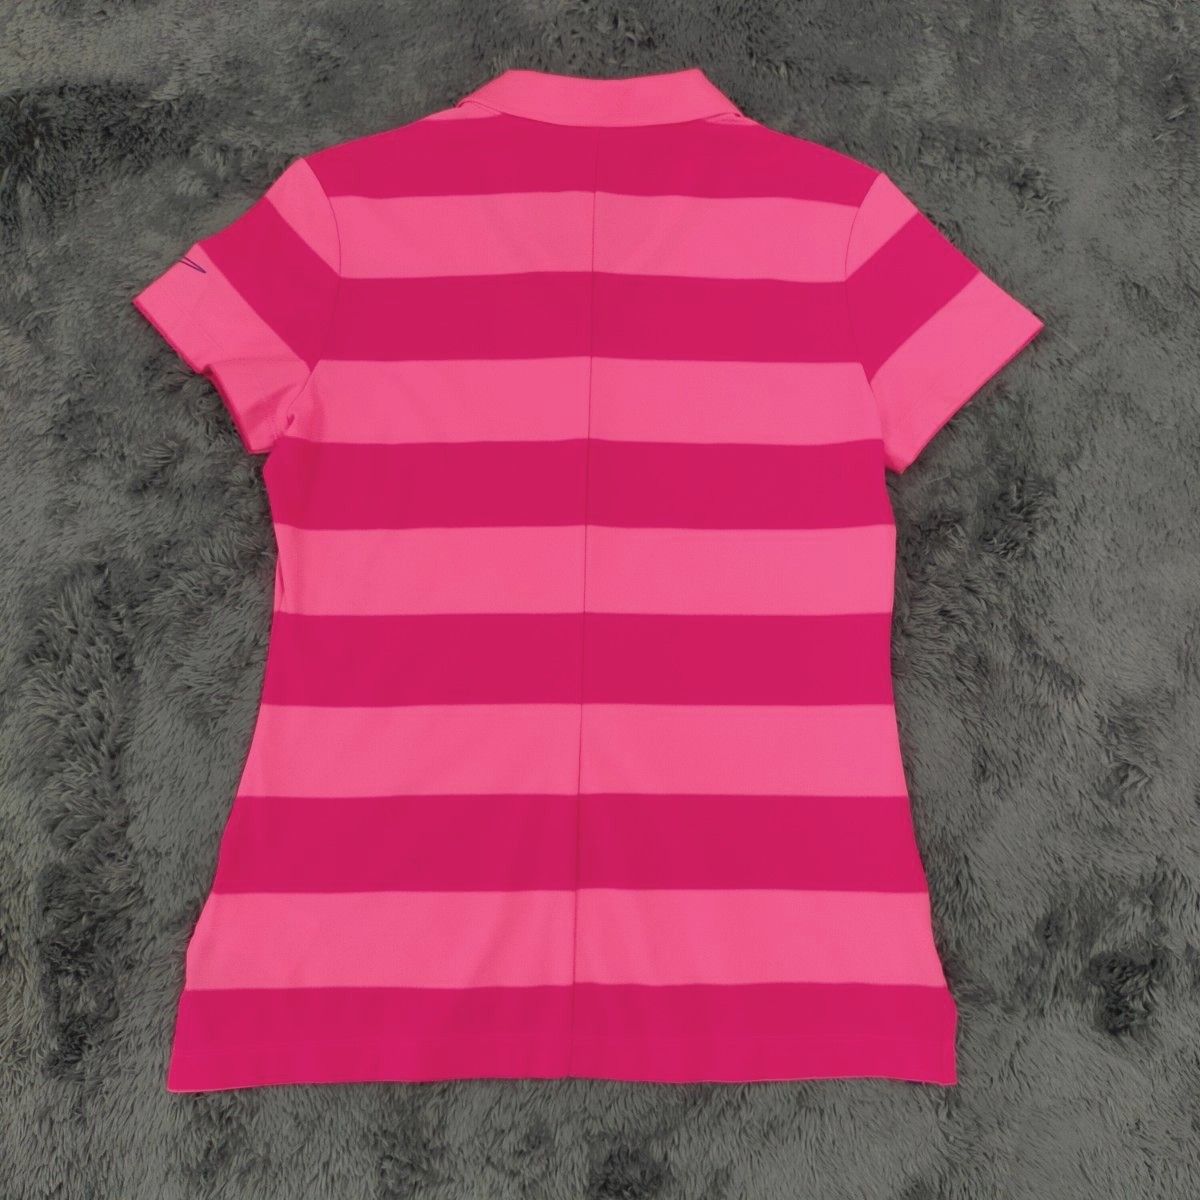 NIKE GOLF ナイキゴルフ 春夏 ゴルフシャツ 襟付きVネック ピンク色 ボーダー レディース Lサイズ